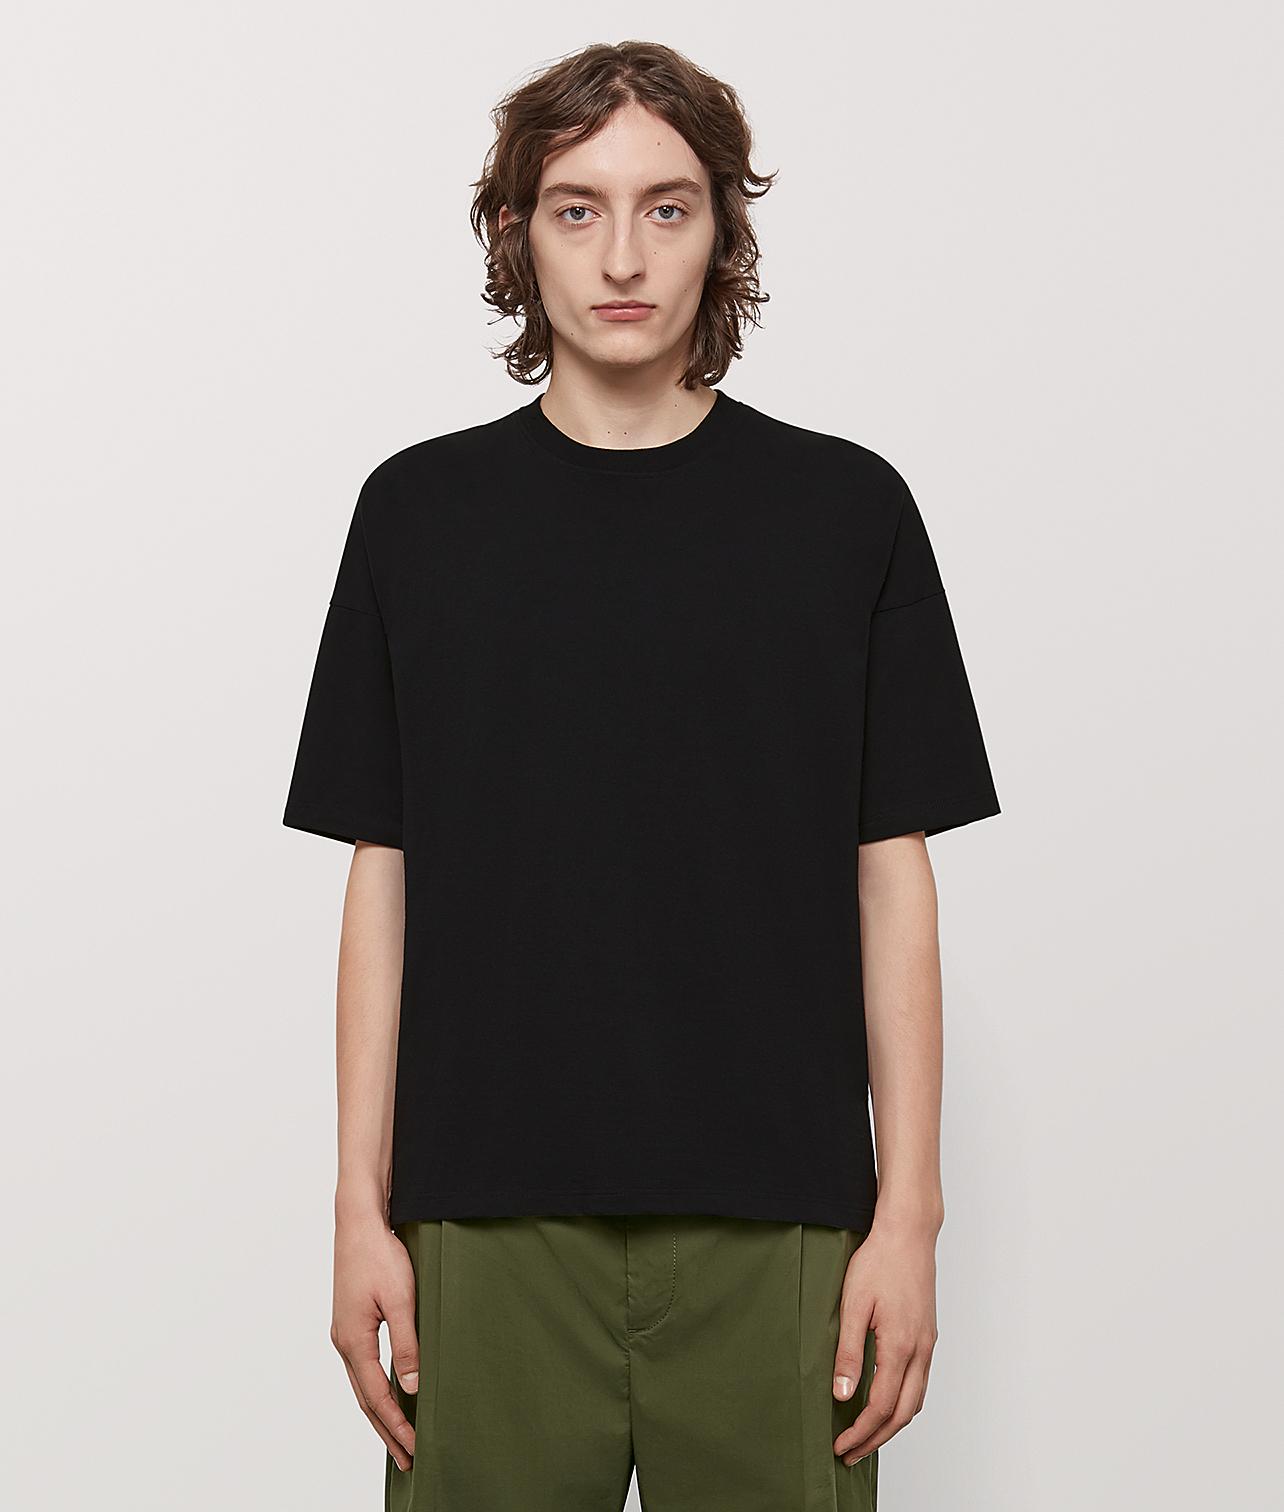 Bottega Veneta Cotton T-shirt in Nero (Black) for Men - Lyst